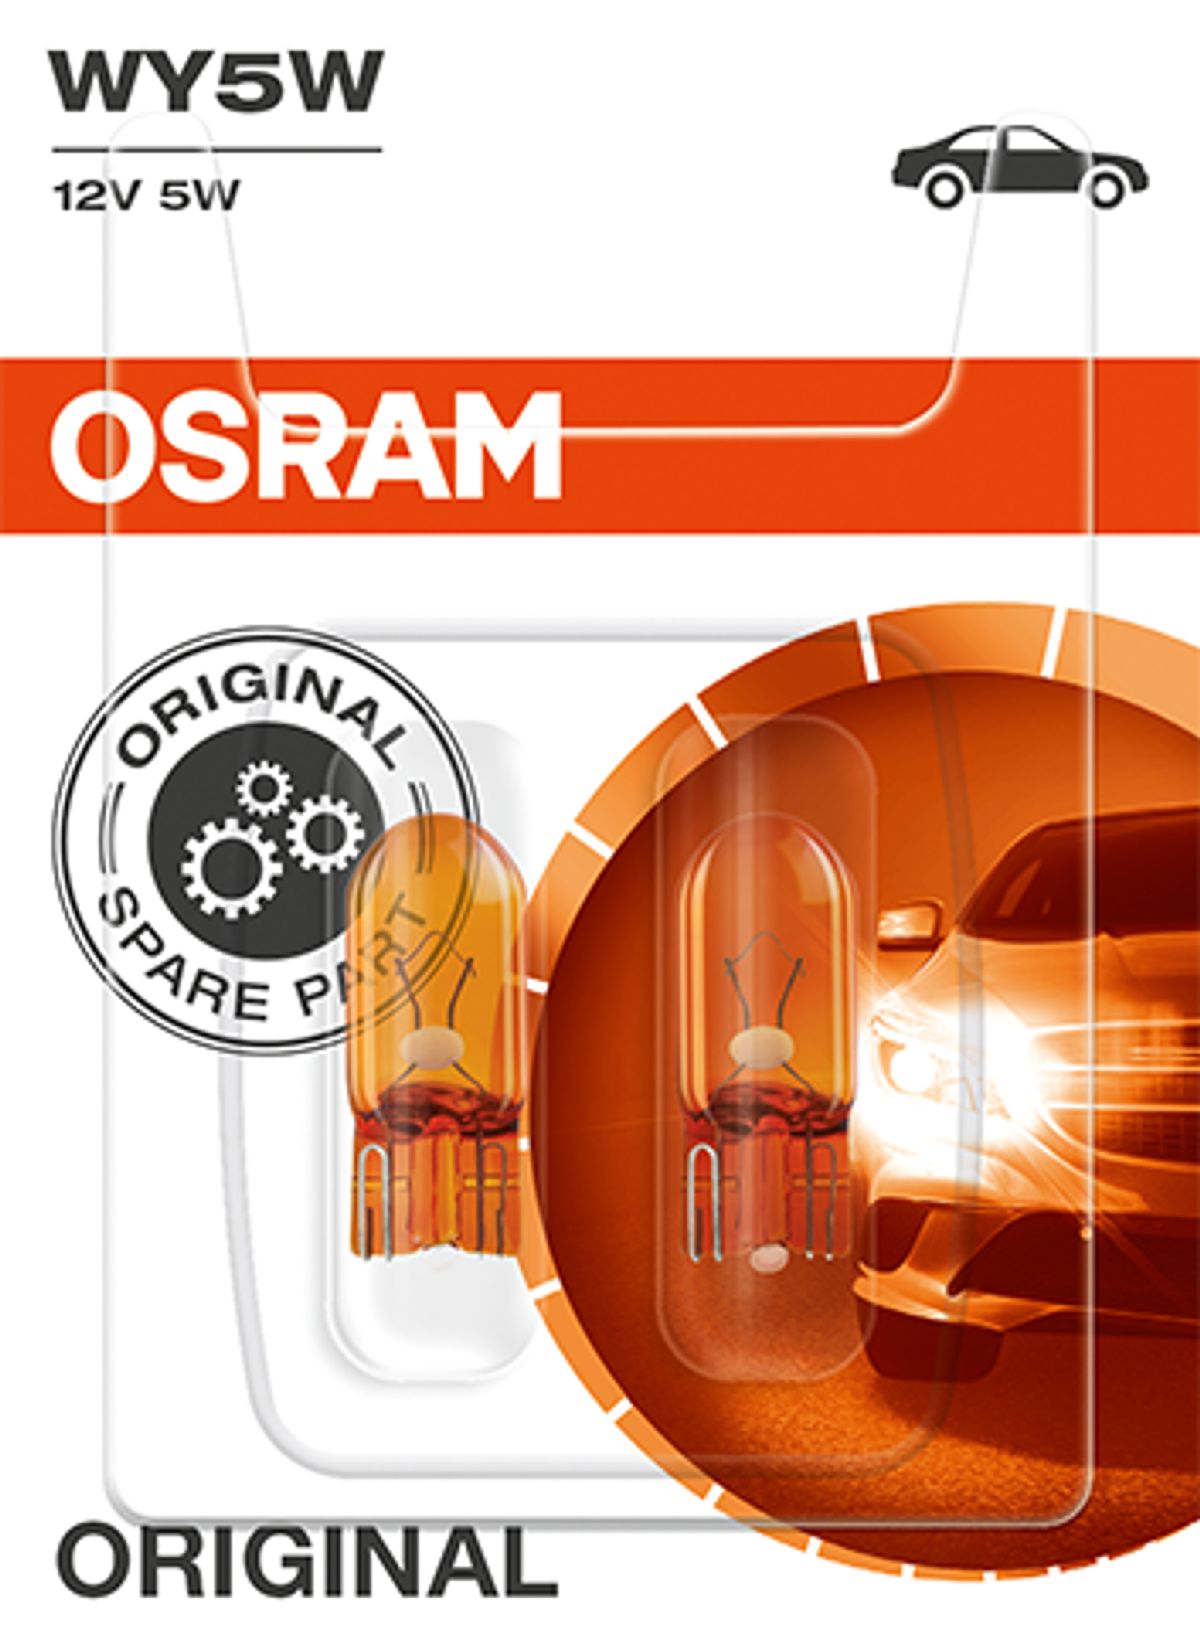 OSRAM LEDguardian® ROAD FLARE Signal TA20 LED Warnlicht Orange